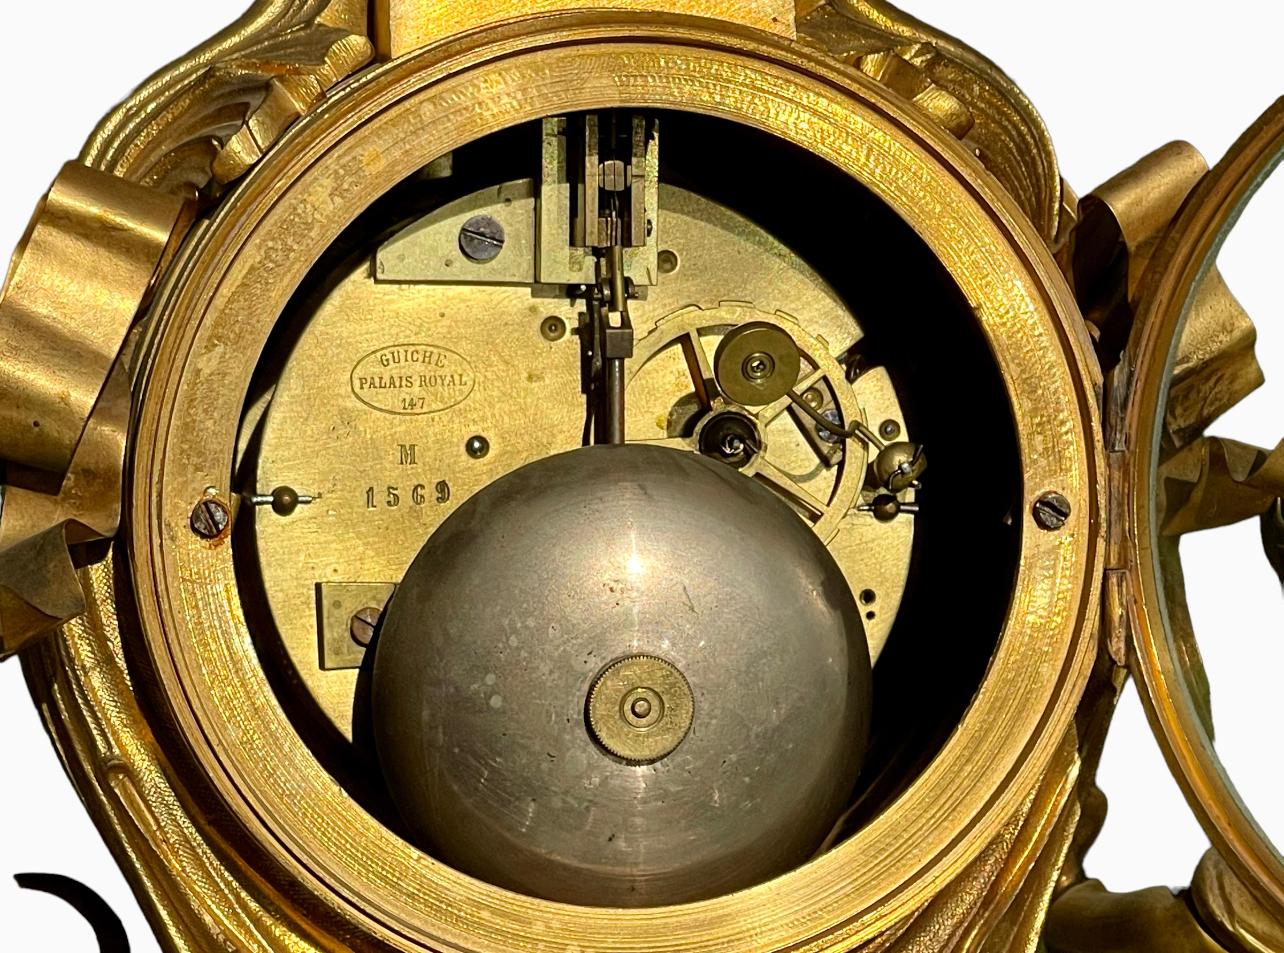 GUICHE Palais Royal - Gilt Bronze Clock with Puttis For Sale 6